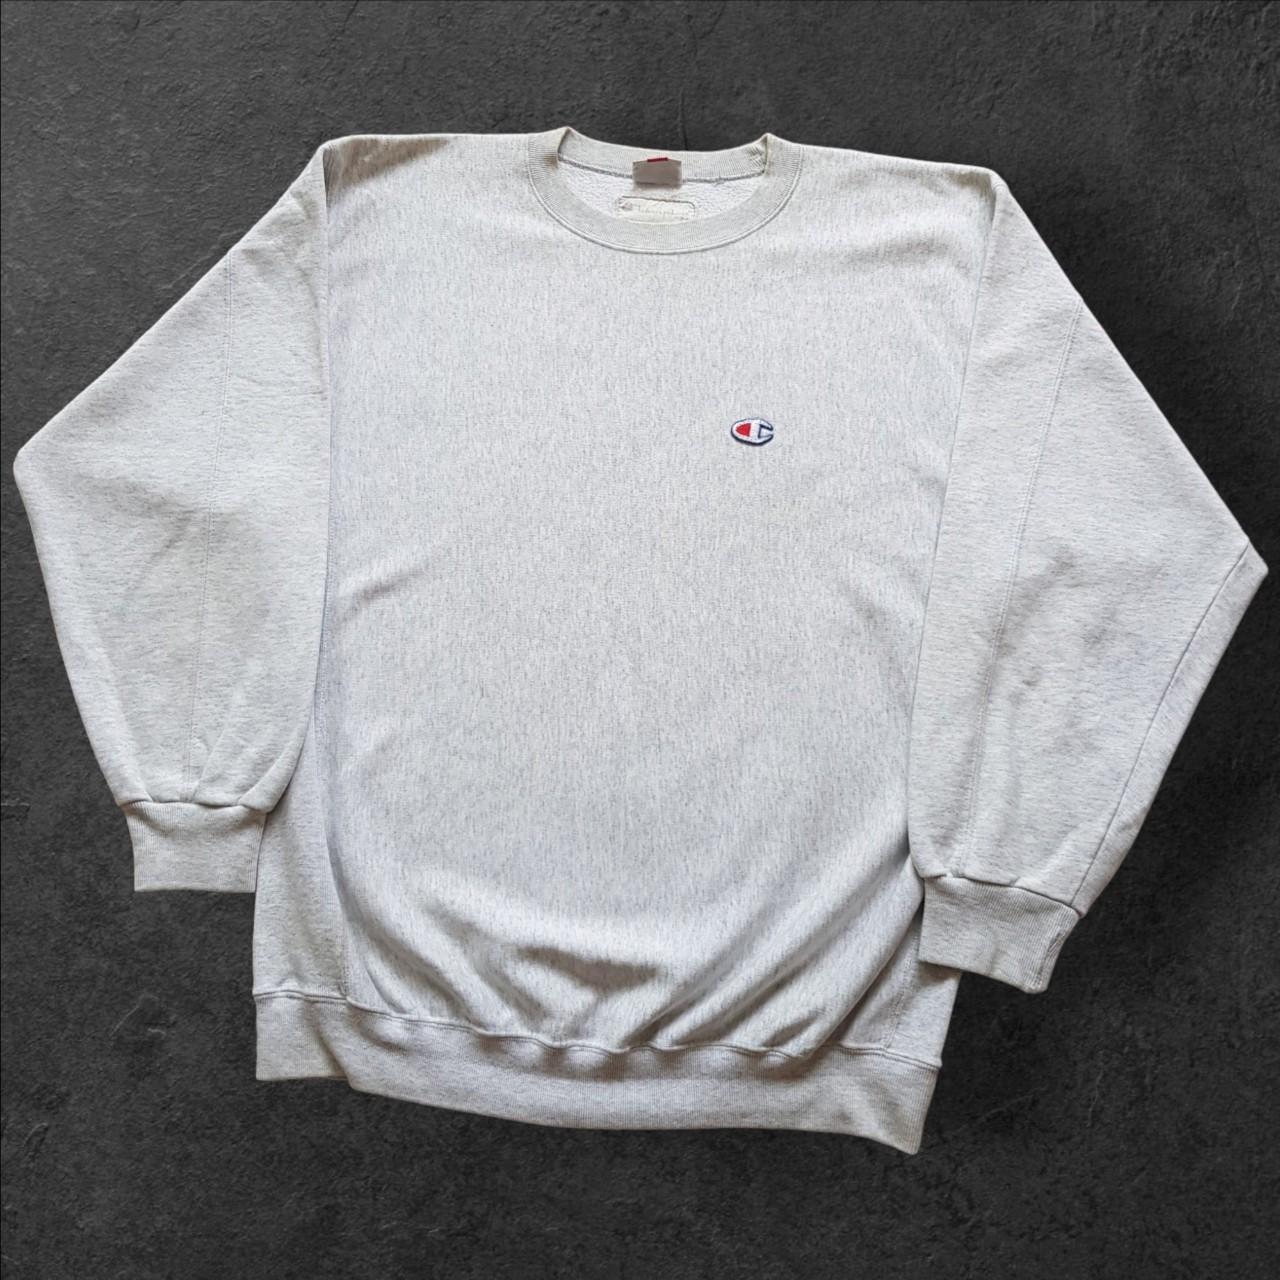 90s champion light ash heather grey / white marl logo patch sweatshirt